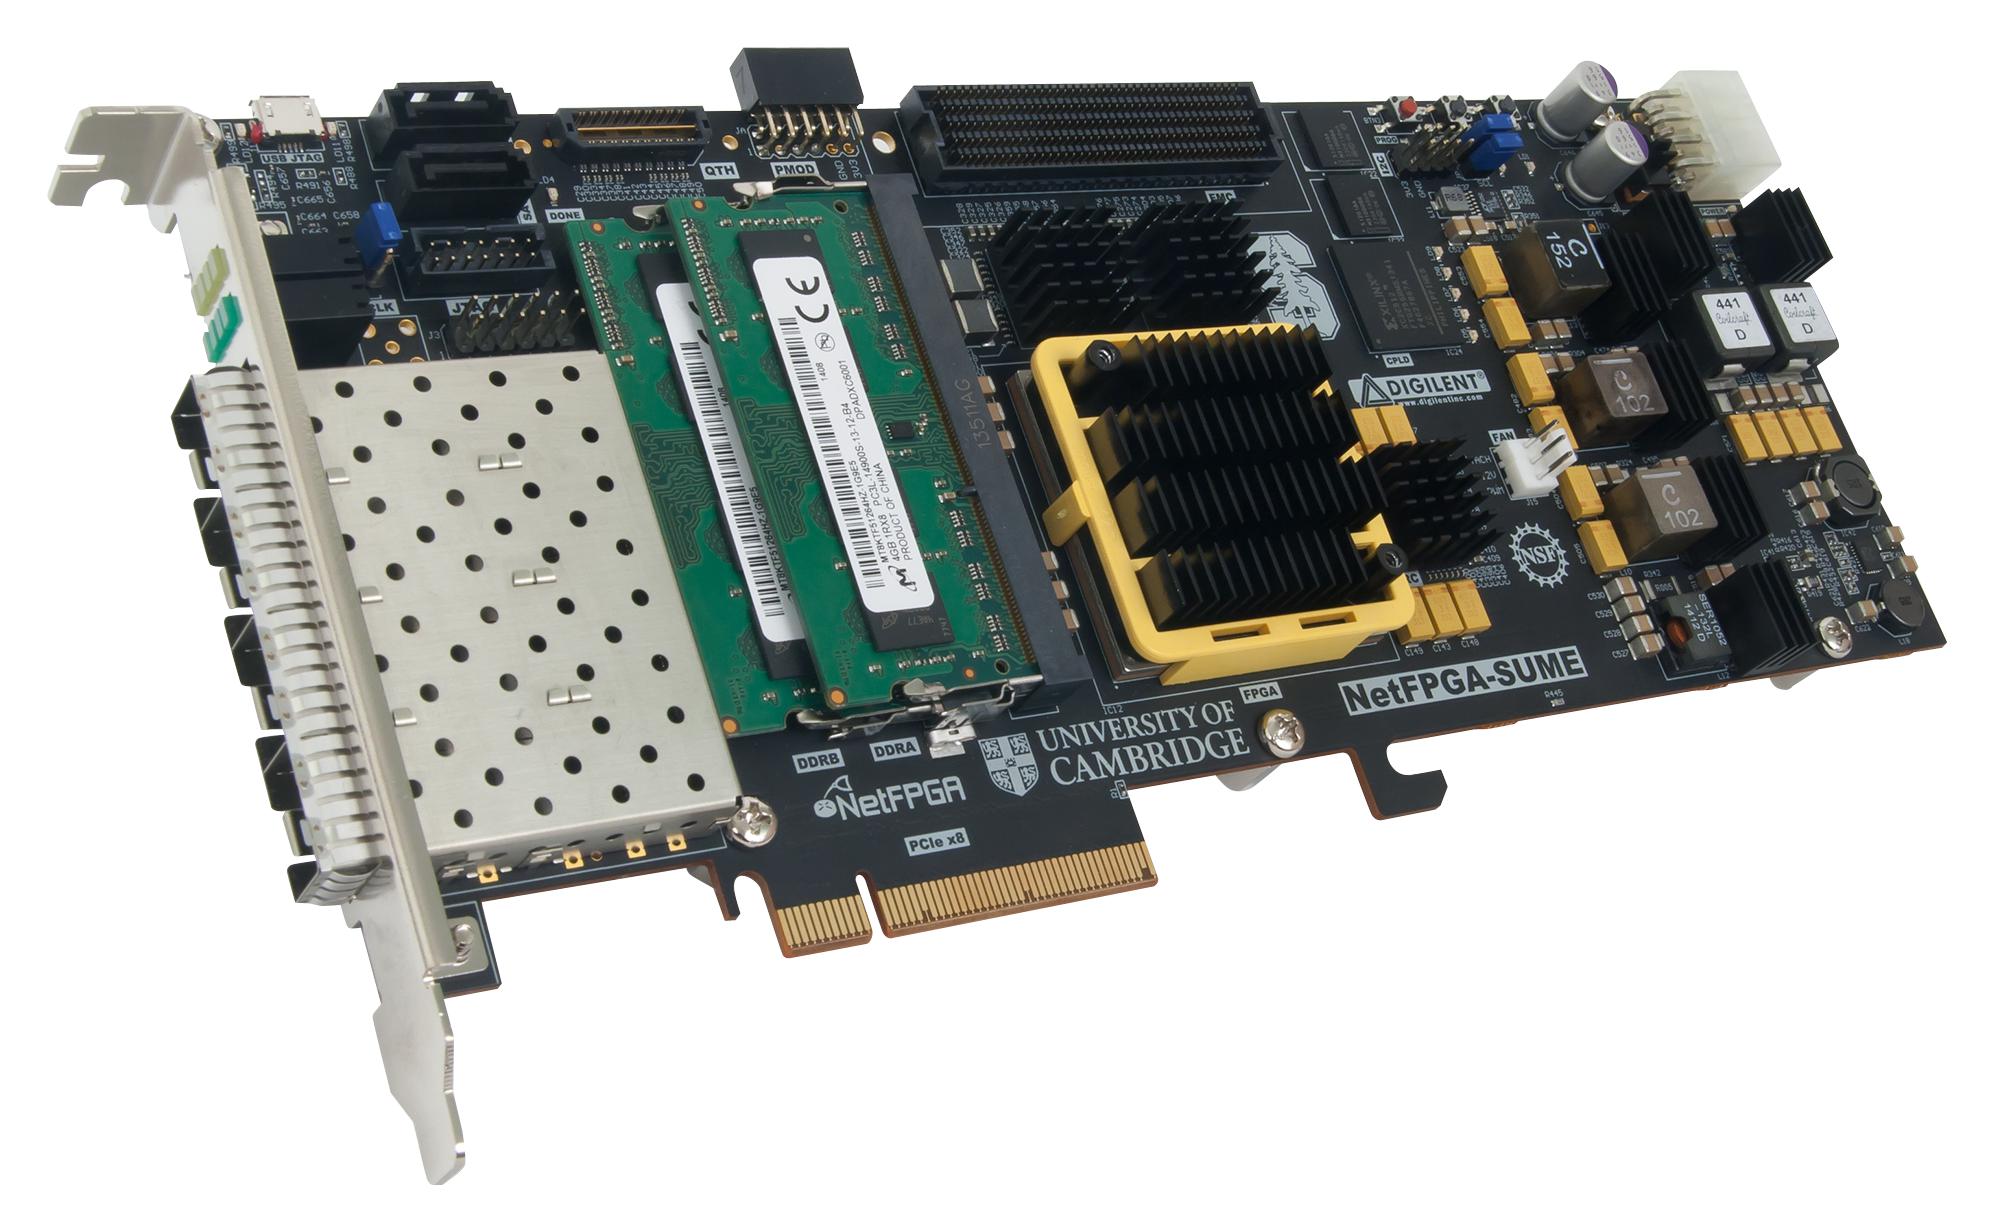 410-301 NETFPGA-SUME DEV BOARD, VIRTEX-7 FPGA DIGILENT